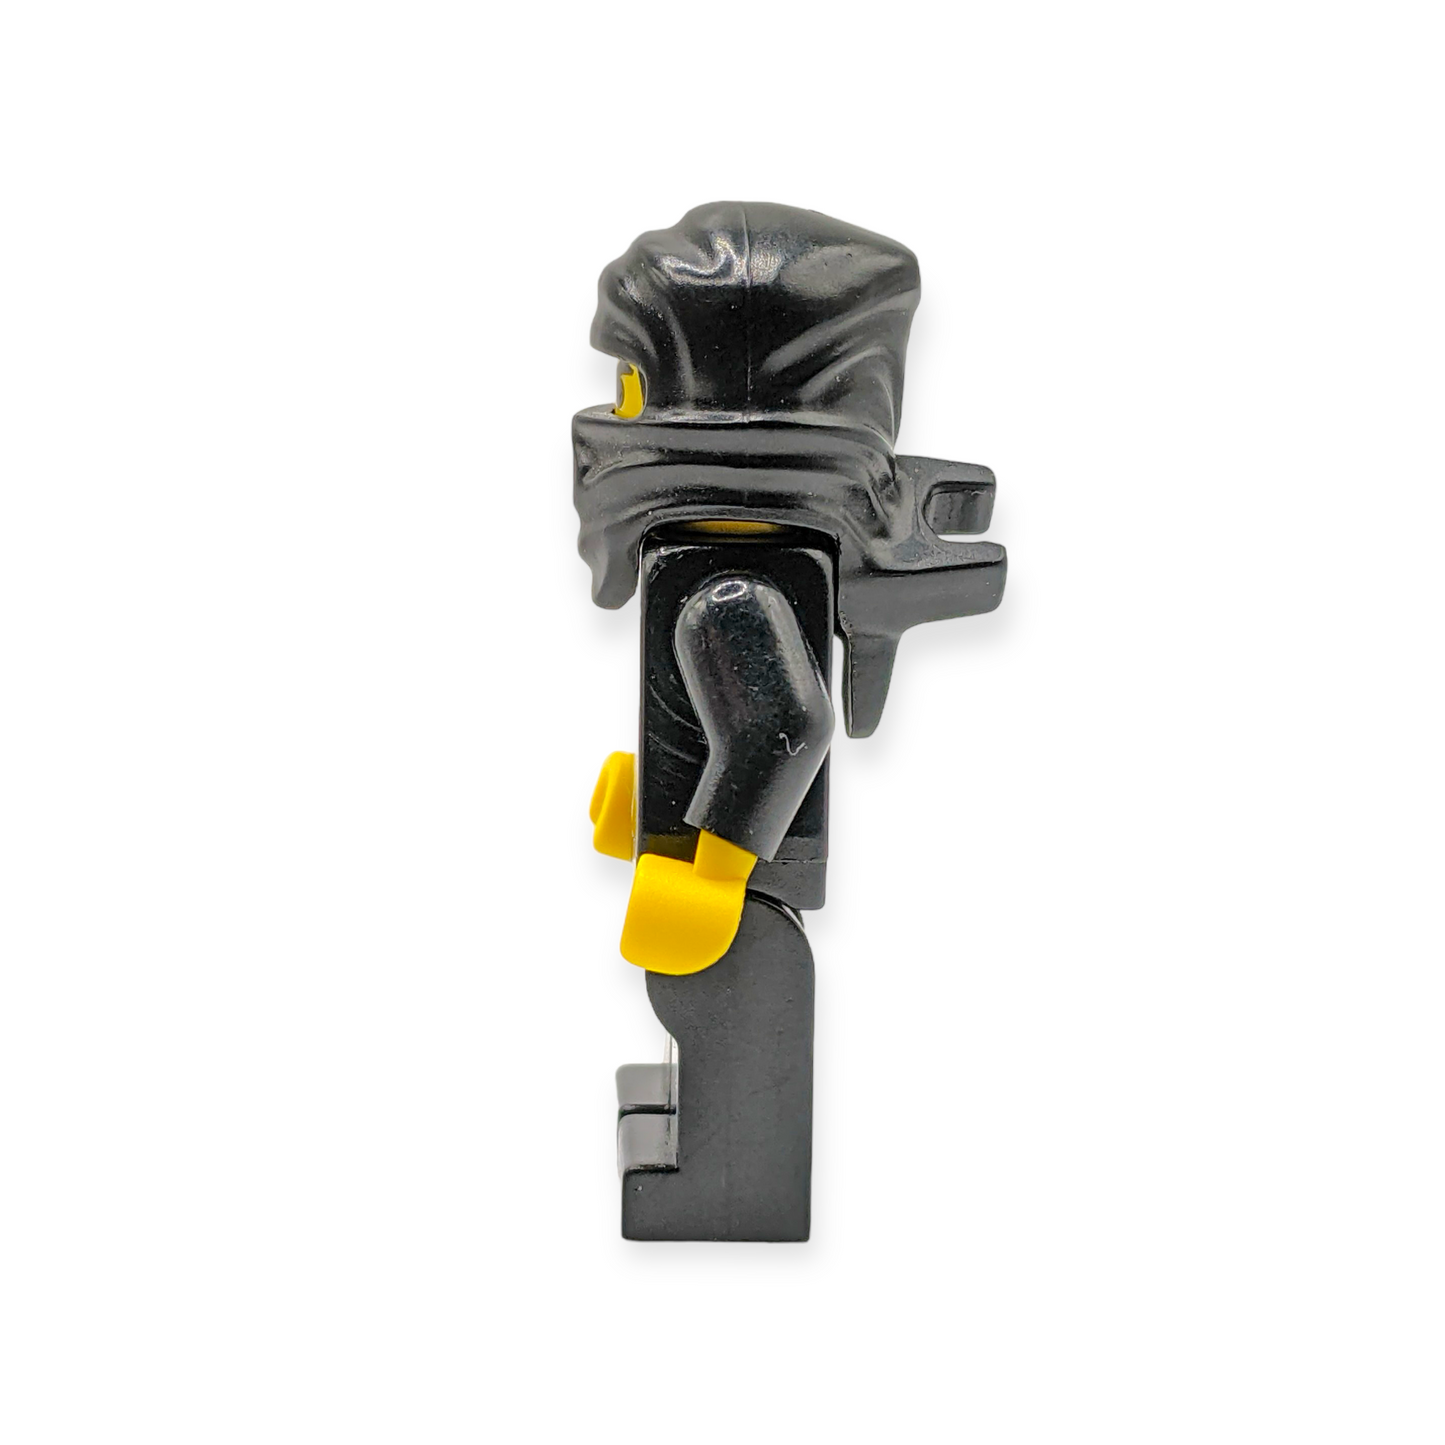 LEGO Minifigur Ninja Black cas048